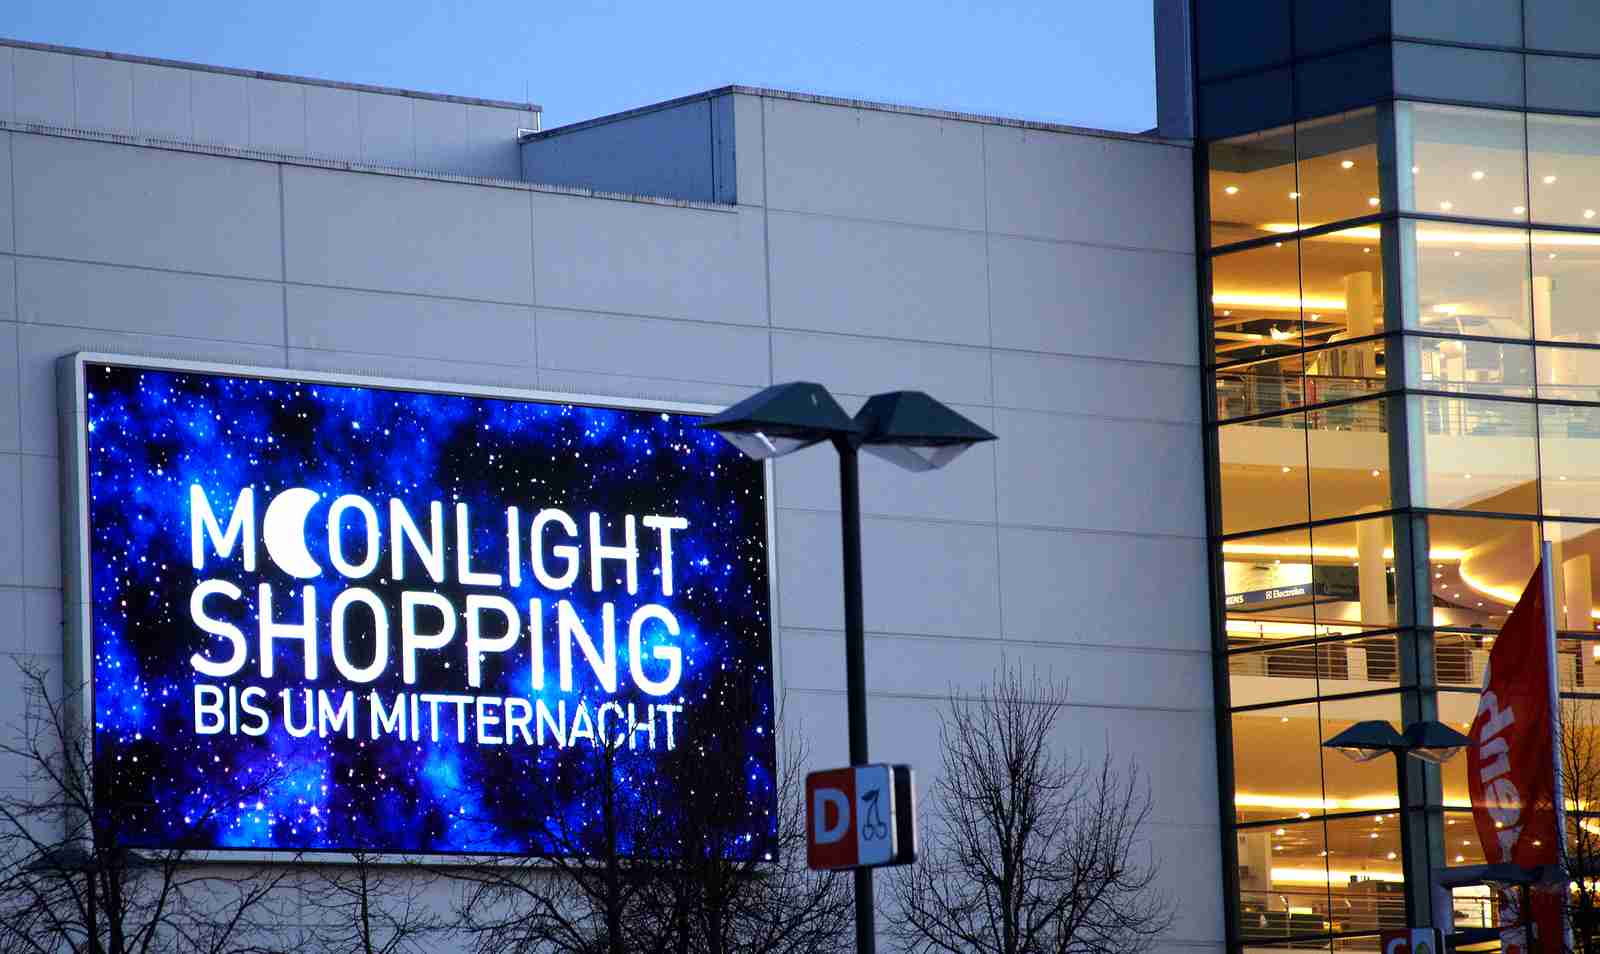 Moonlight-Shopping bei dodenhof Foto: dodenhof